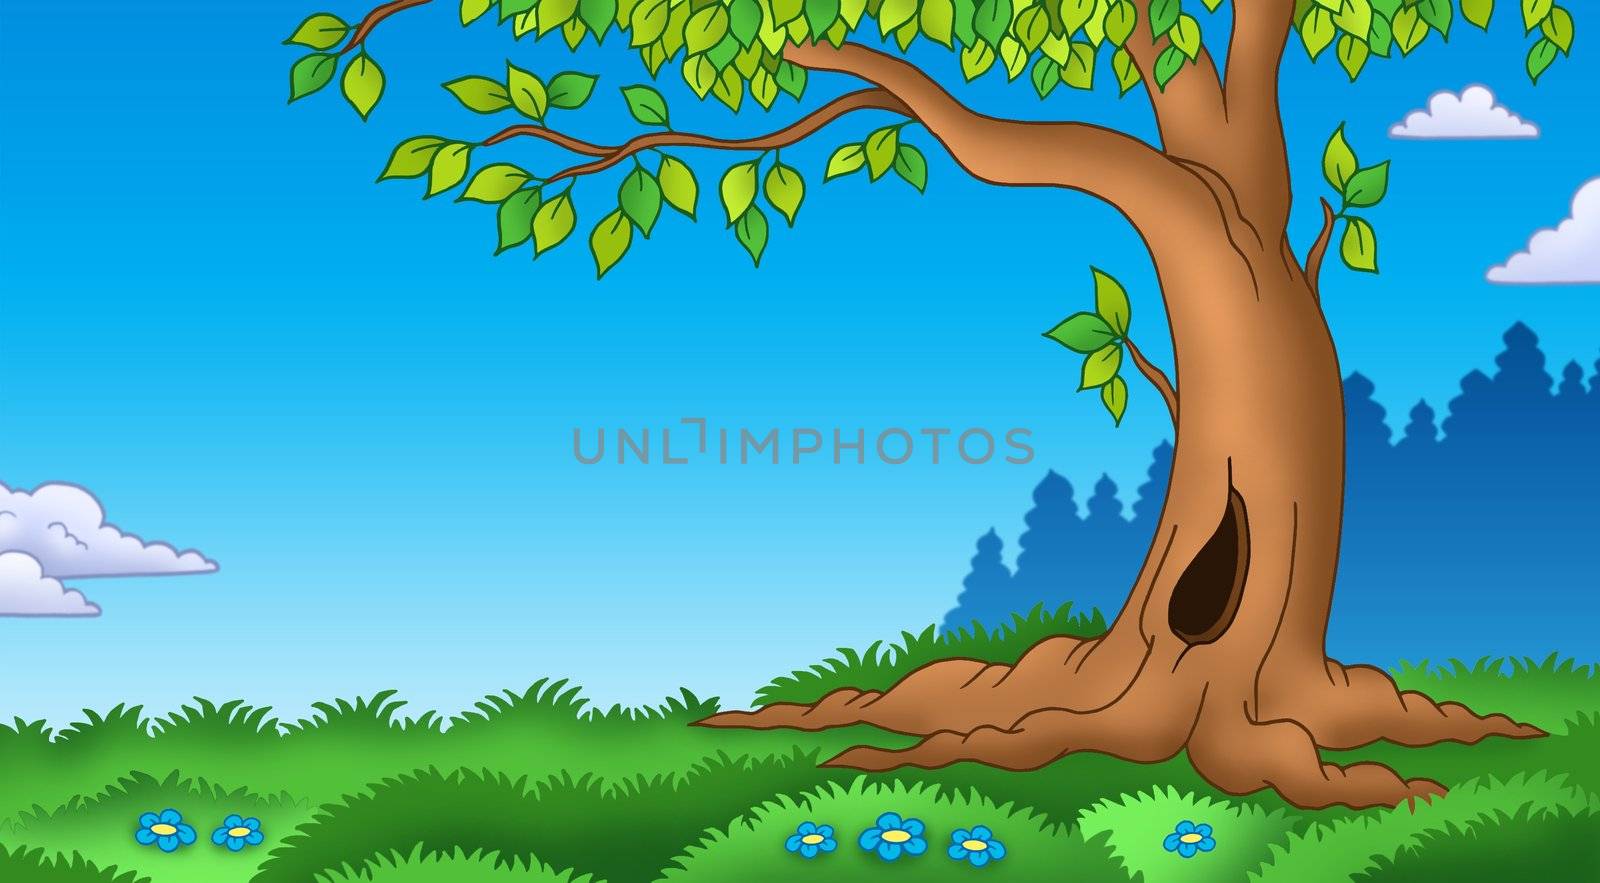 Leafy tree in grassy landscape - color illustration.